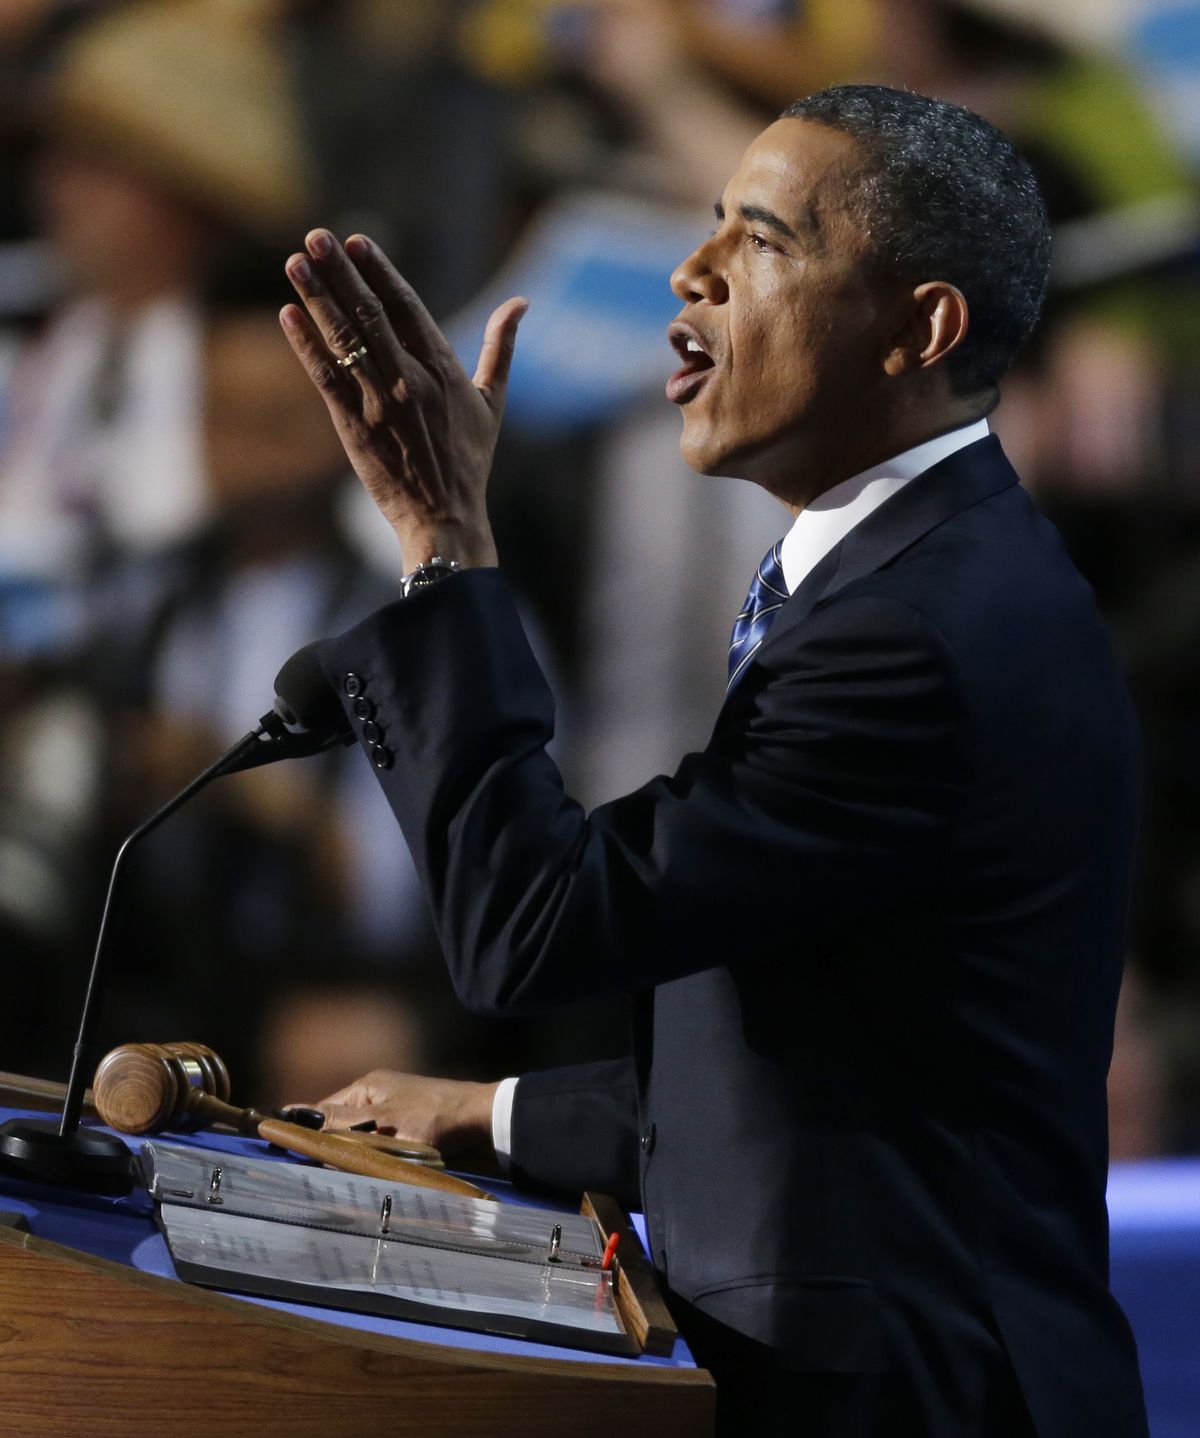 President Barack Obama speaks to delegates at the Democratic National Convention in Charlotte, N.C., on Thursday, Sept. 6, 2012. (Lynne Sladky / Associated Press)